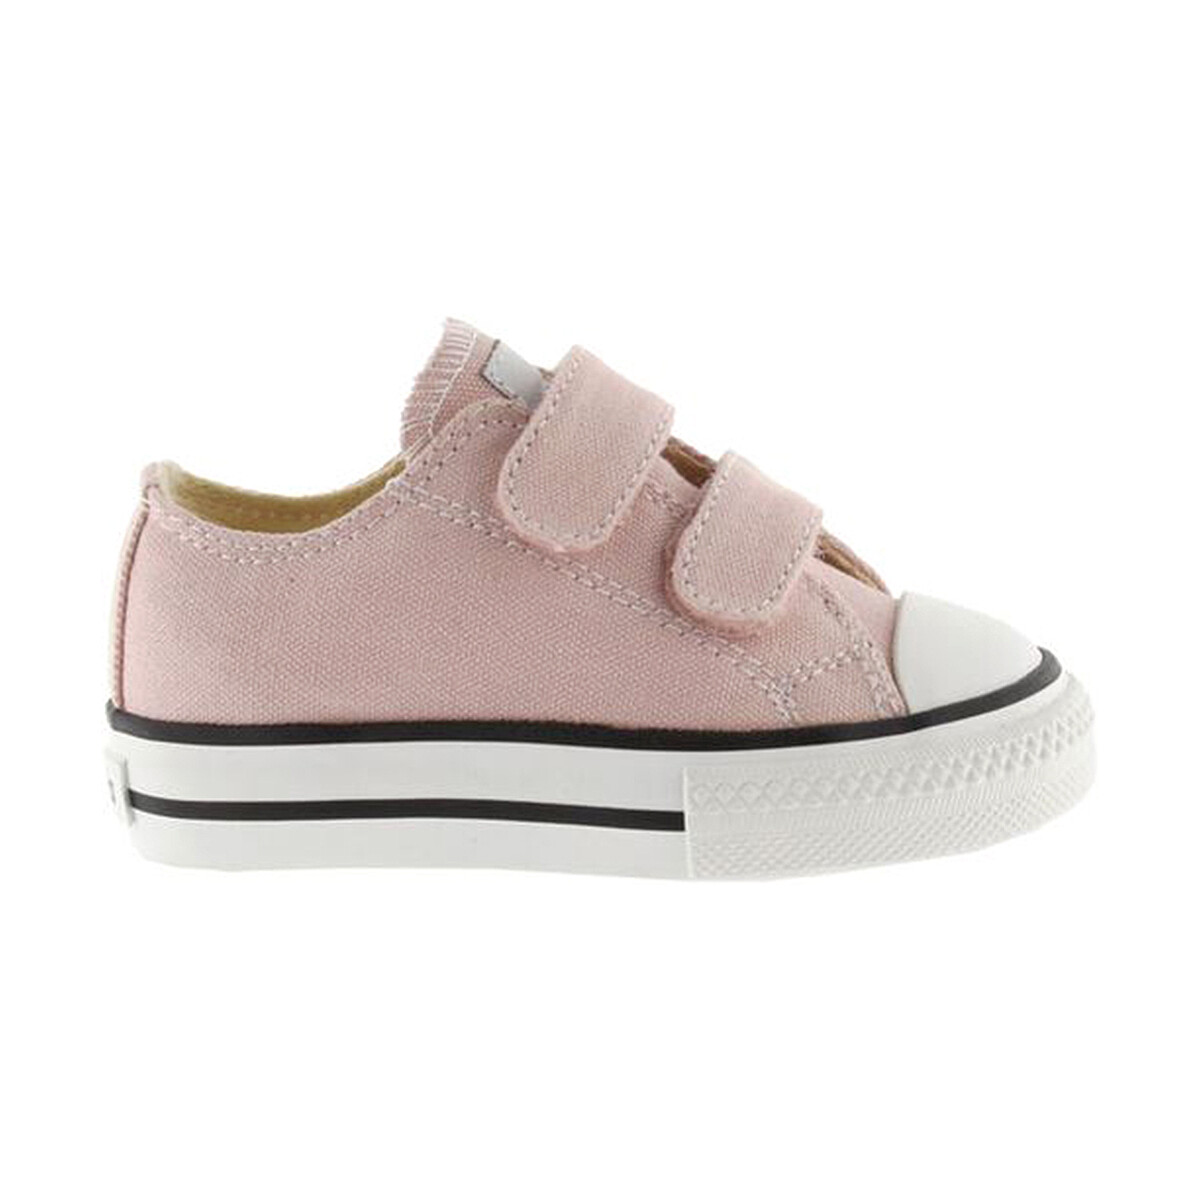 Schuhe Kinder Sneaker Low Victoria SPORT  106555 CANVAS TRIBU Haut